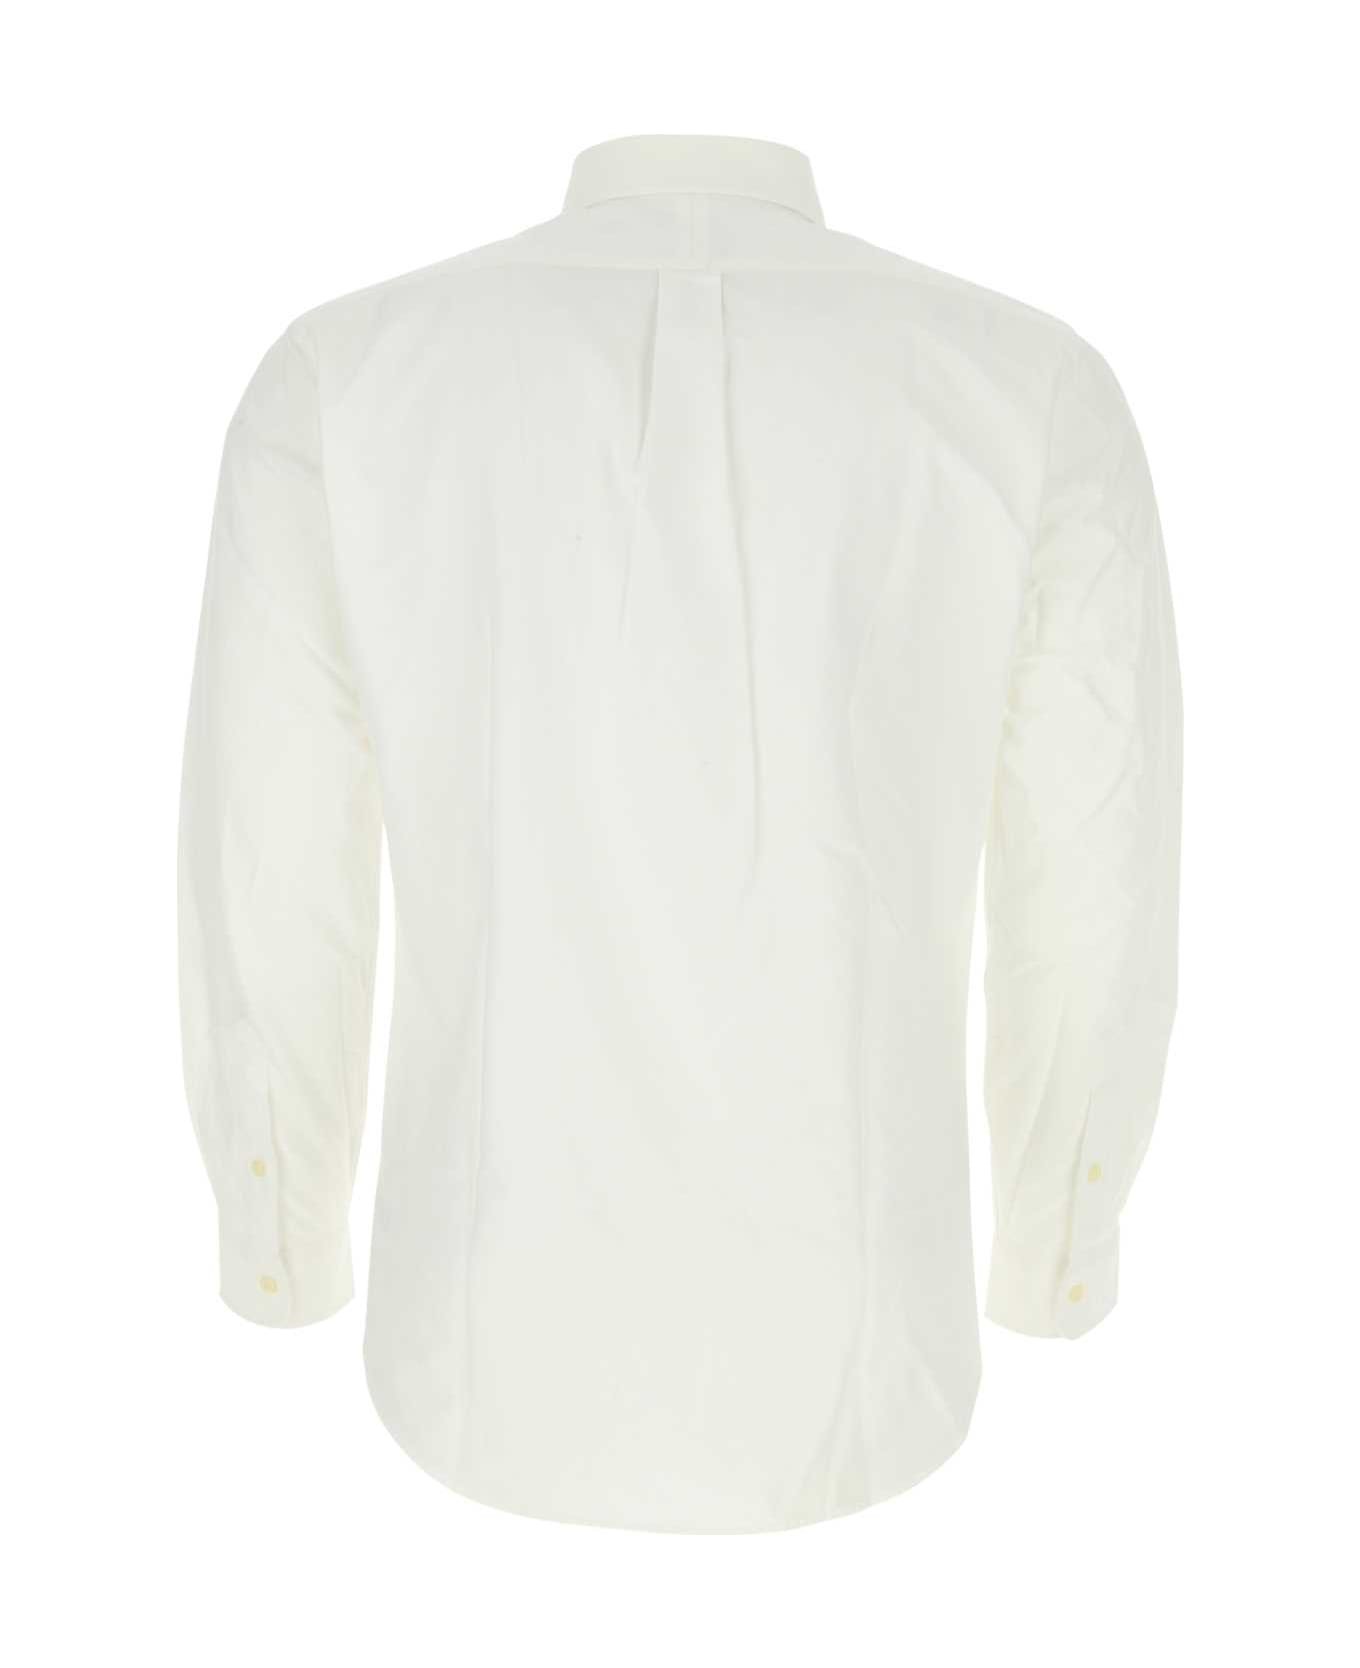 Polo Ralph Lauren White Oxford Shirt - White